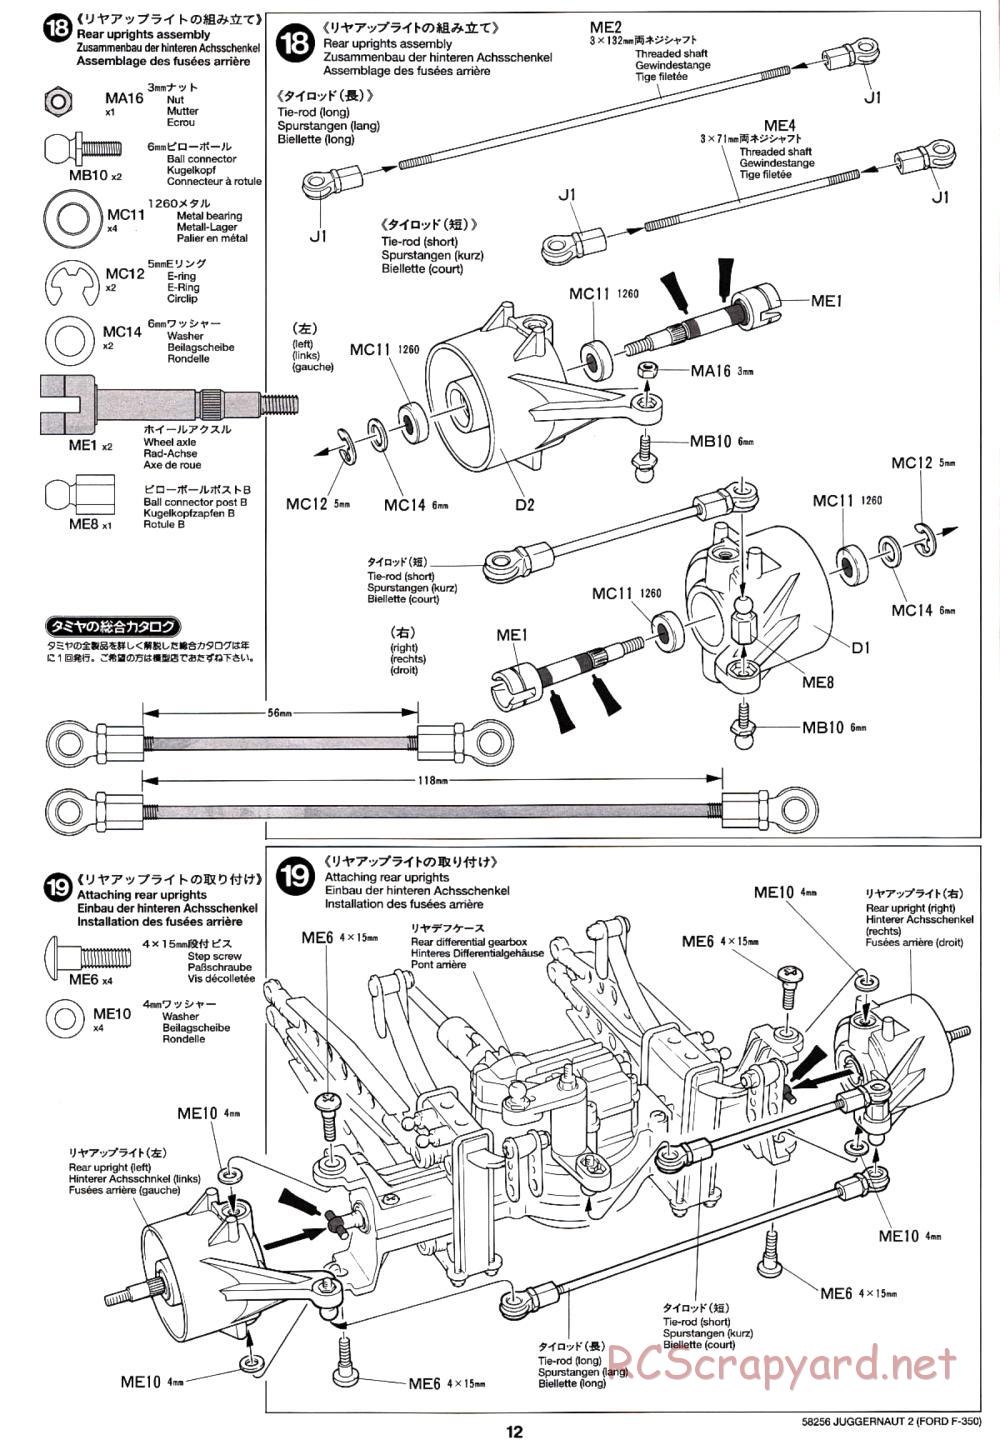 Tamiya - Juggernaut 2 Chassis - Manual - Page 12